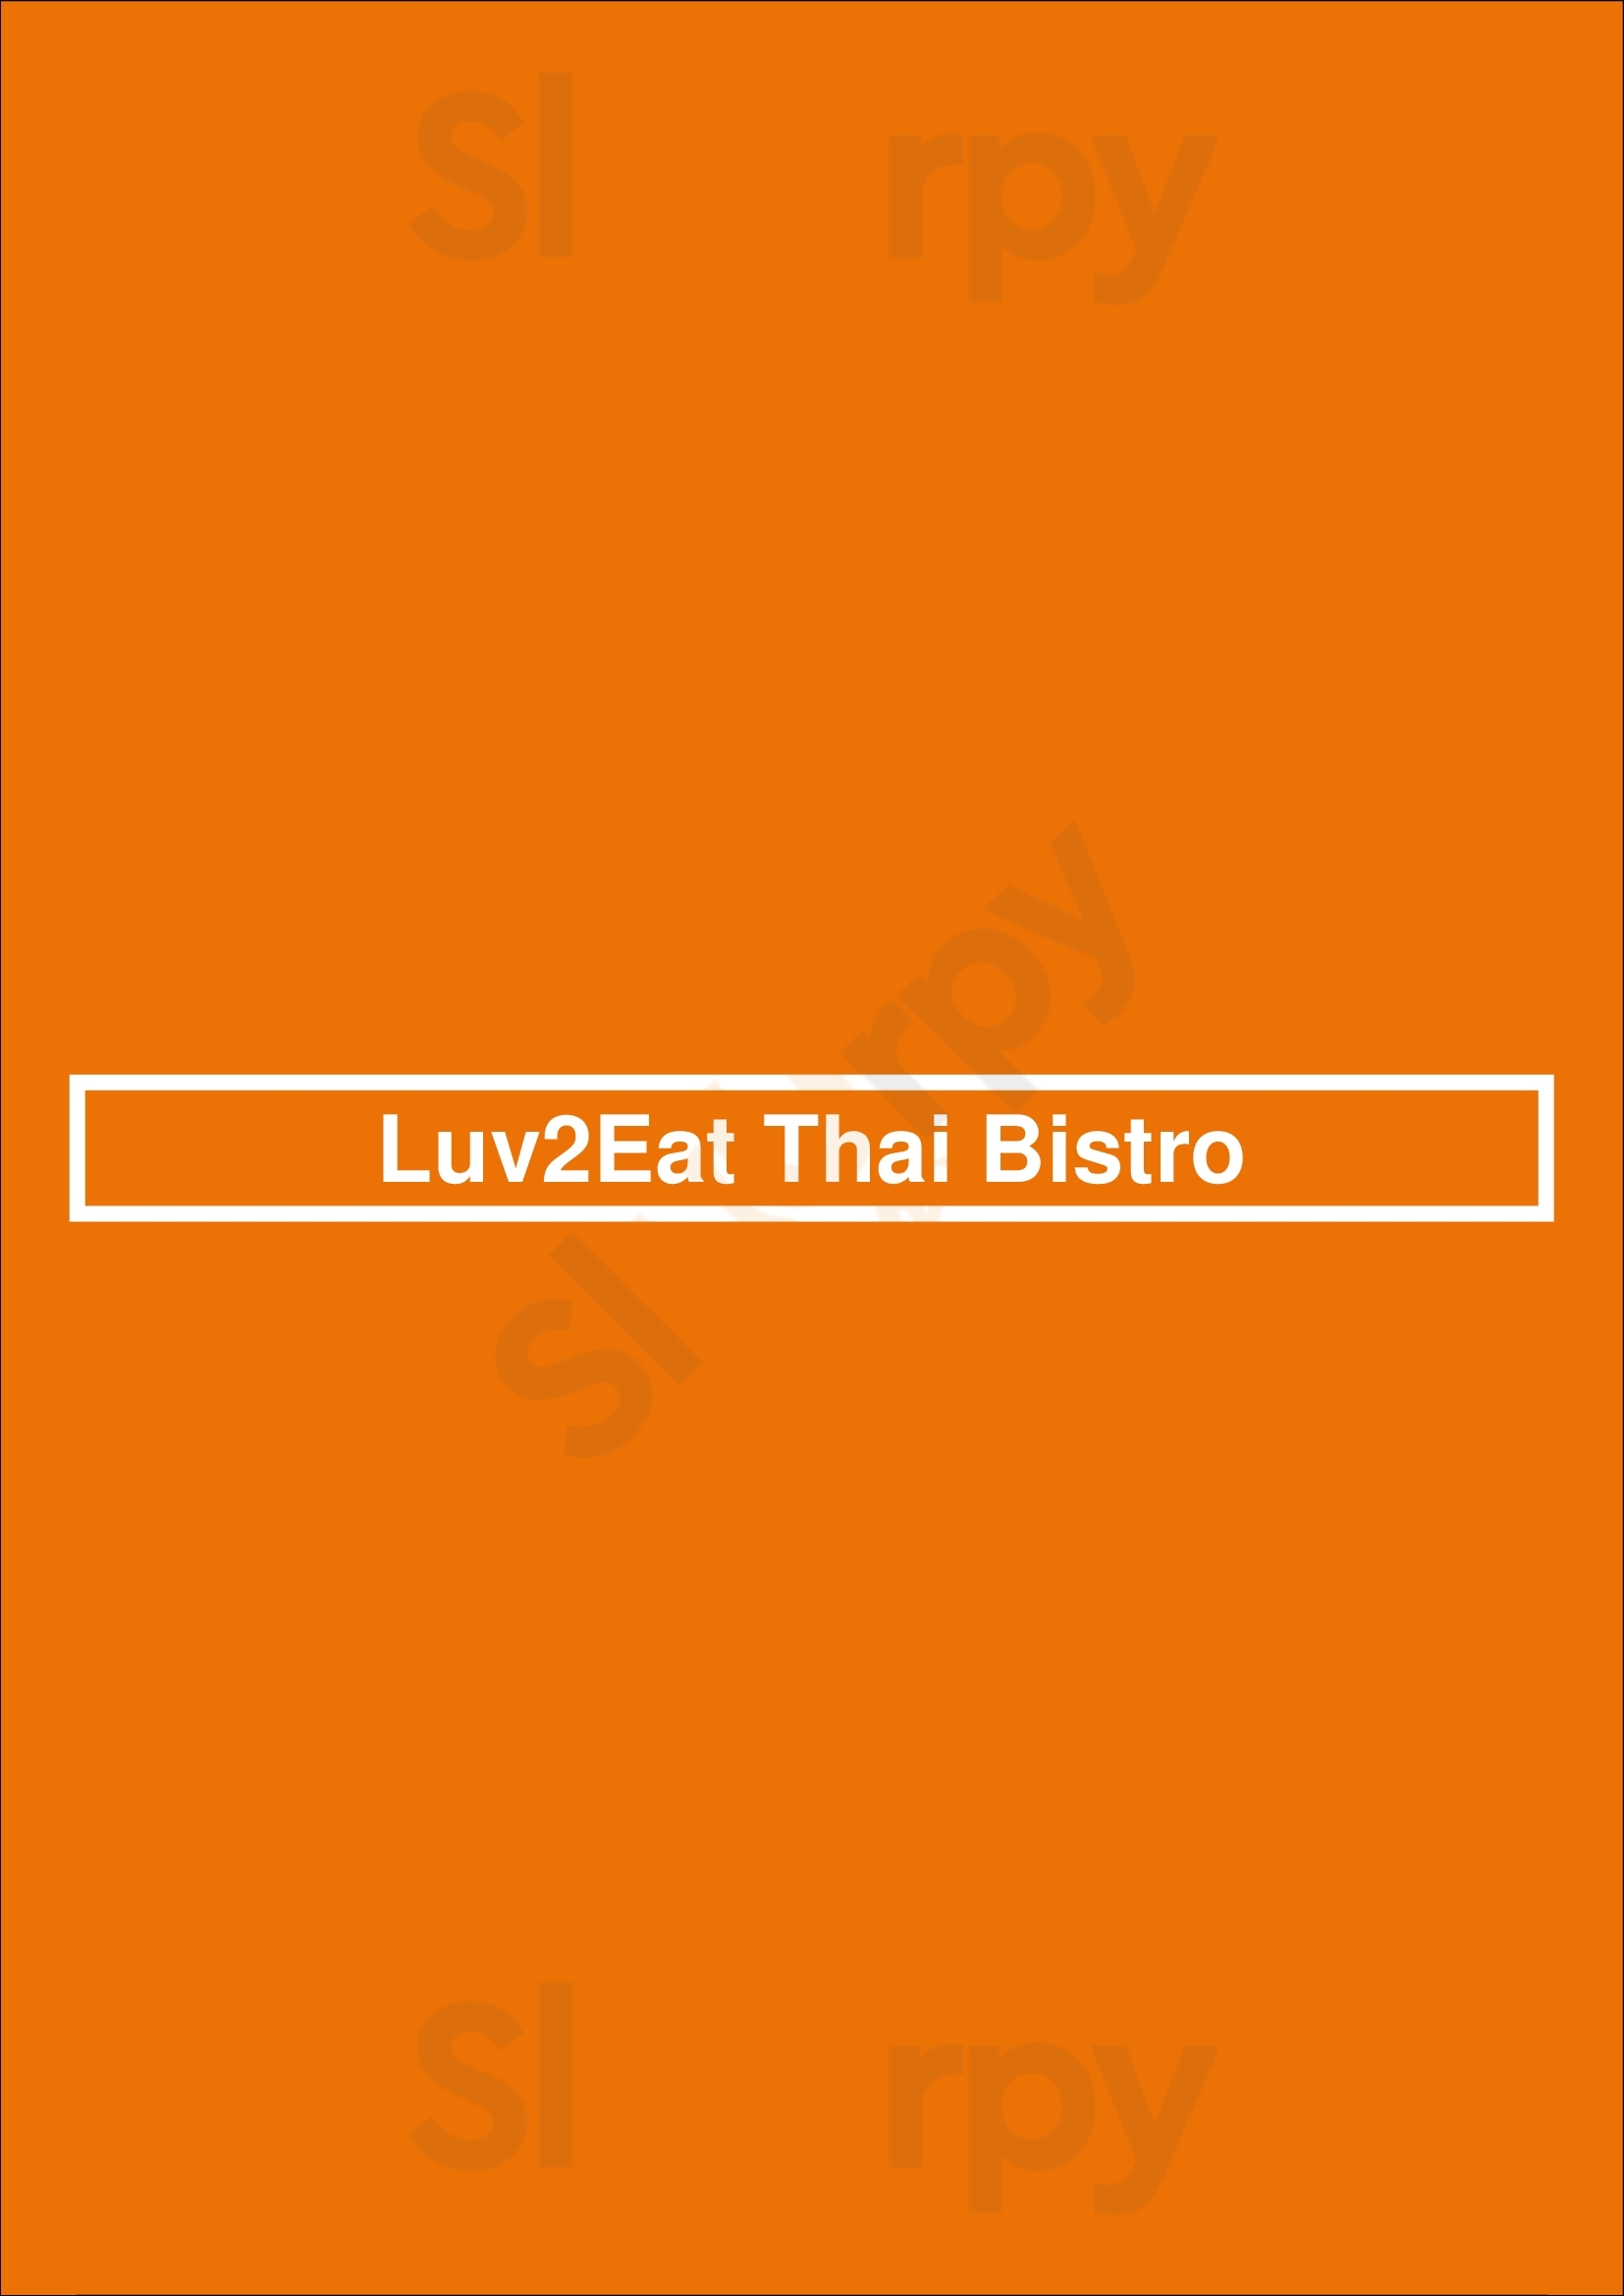 Luv2eat Thai Bistro Los Angeles Menu - 1